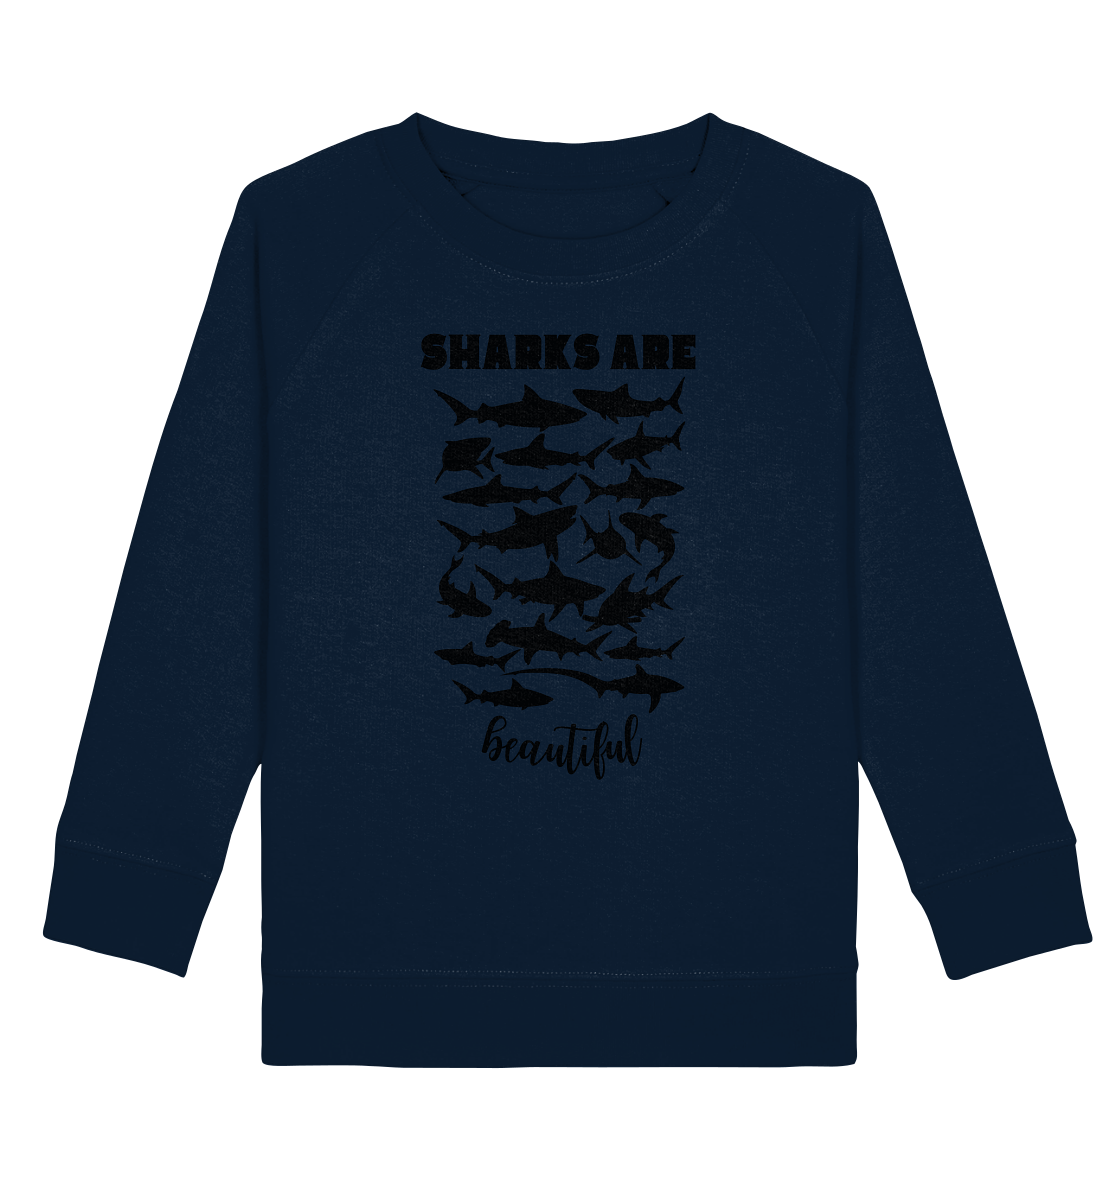 Sharks are beautiful - Kids Organic Sweatshirt